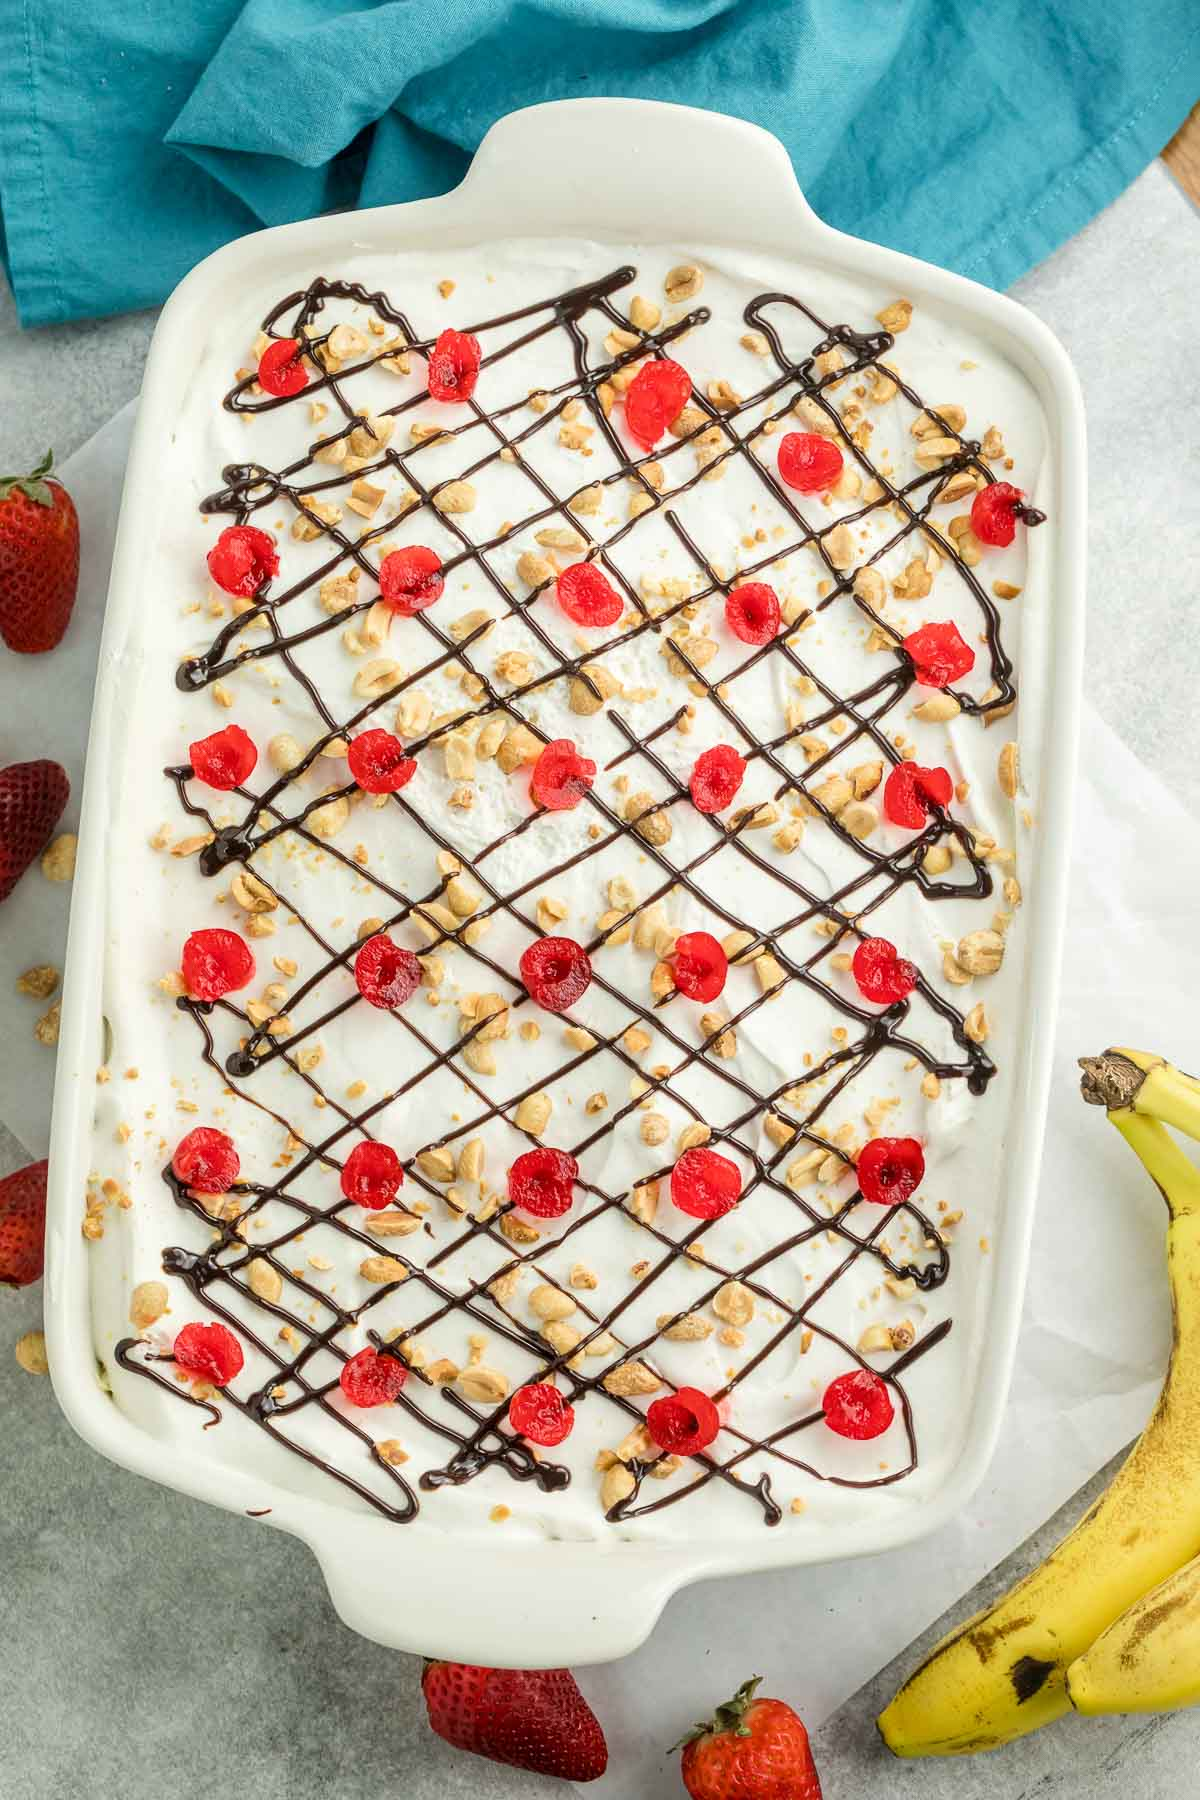 banana split cake topped with hot fudge, maraschino cherries, and peanuts